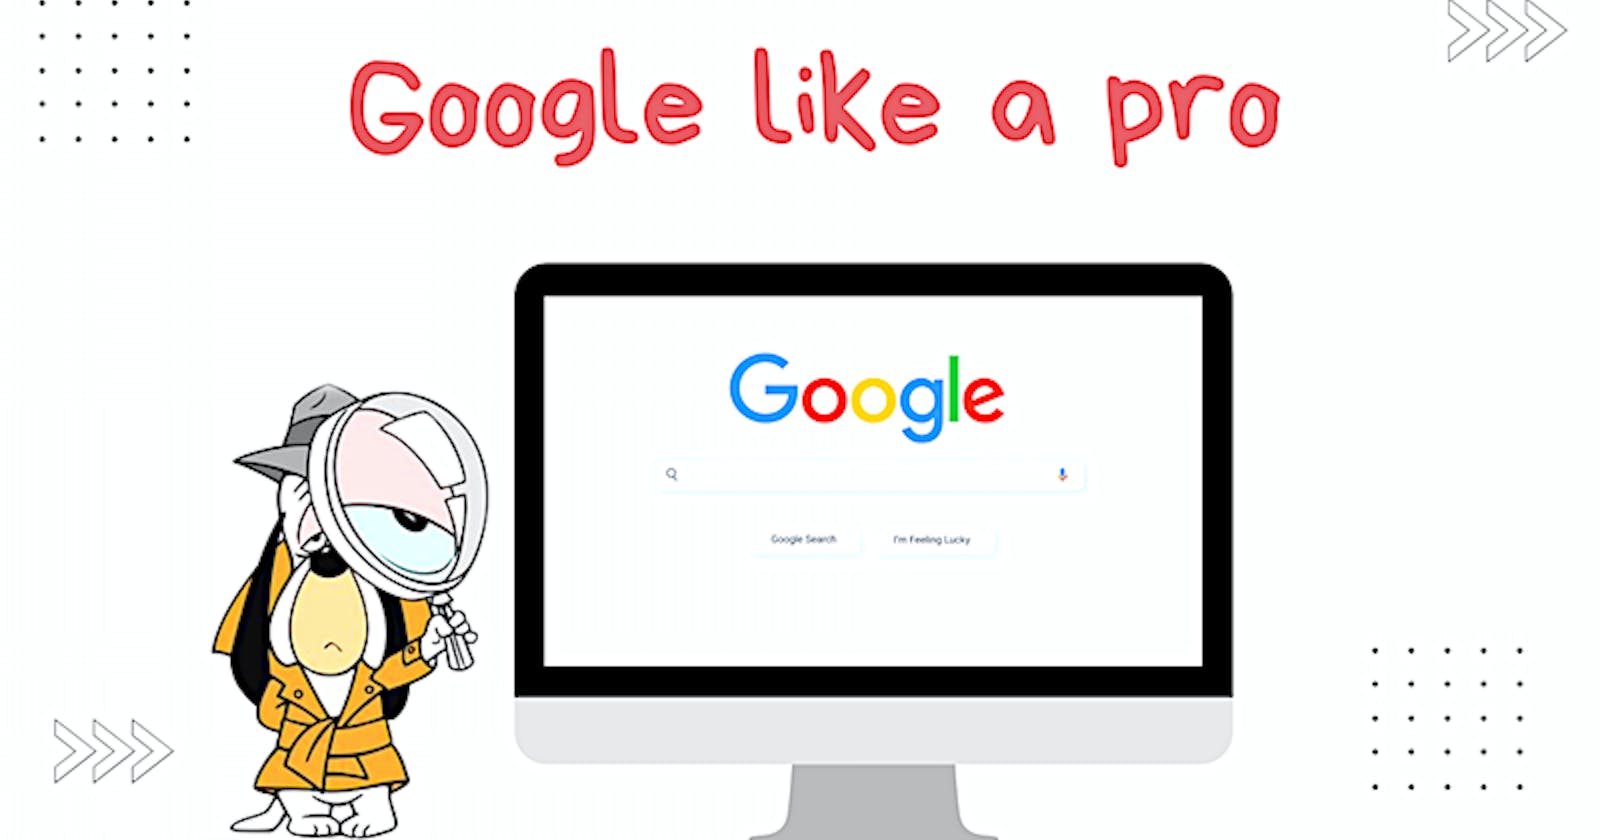 14 tips to Google like a pro